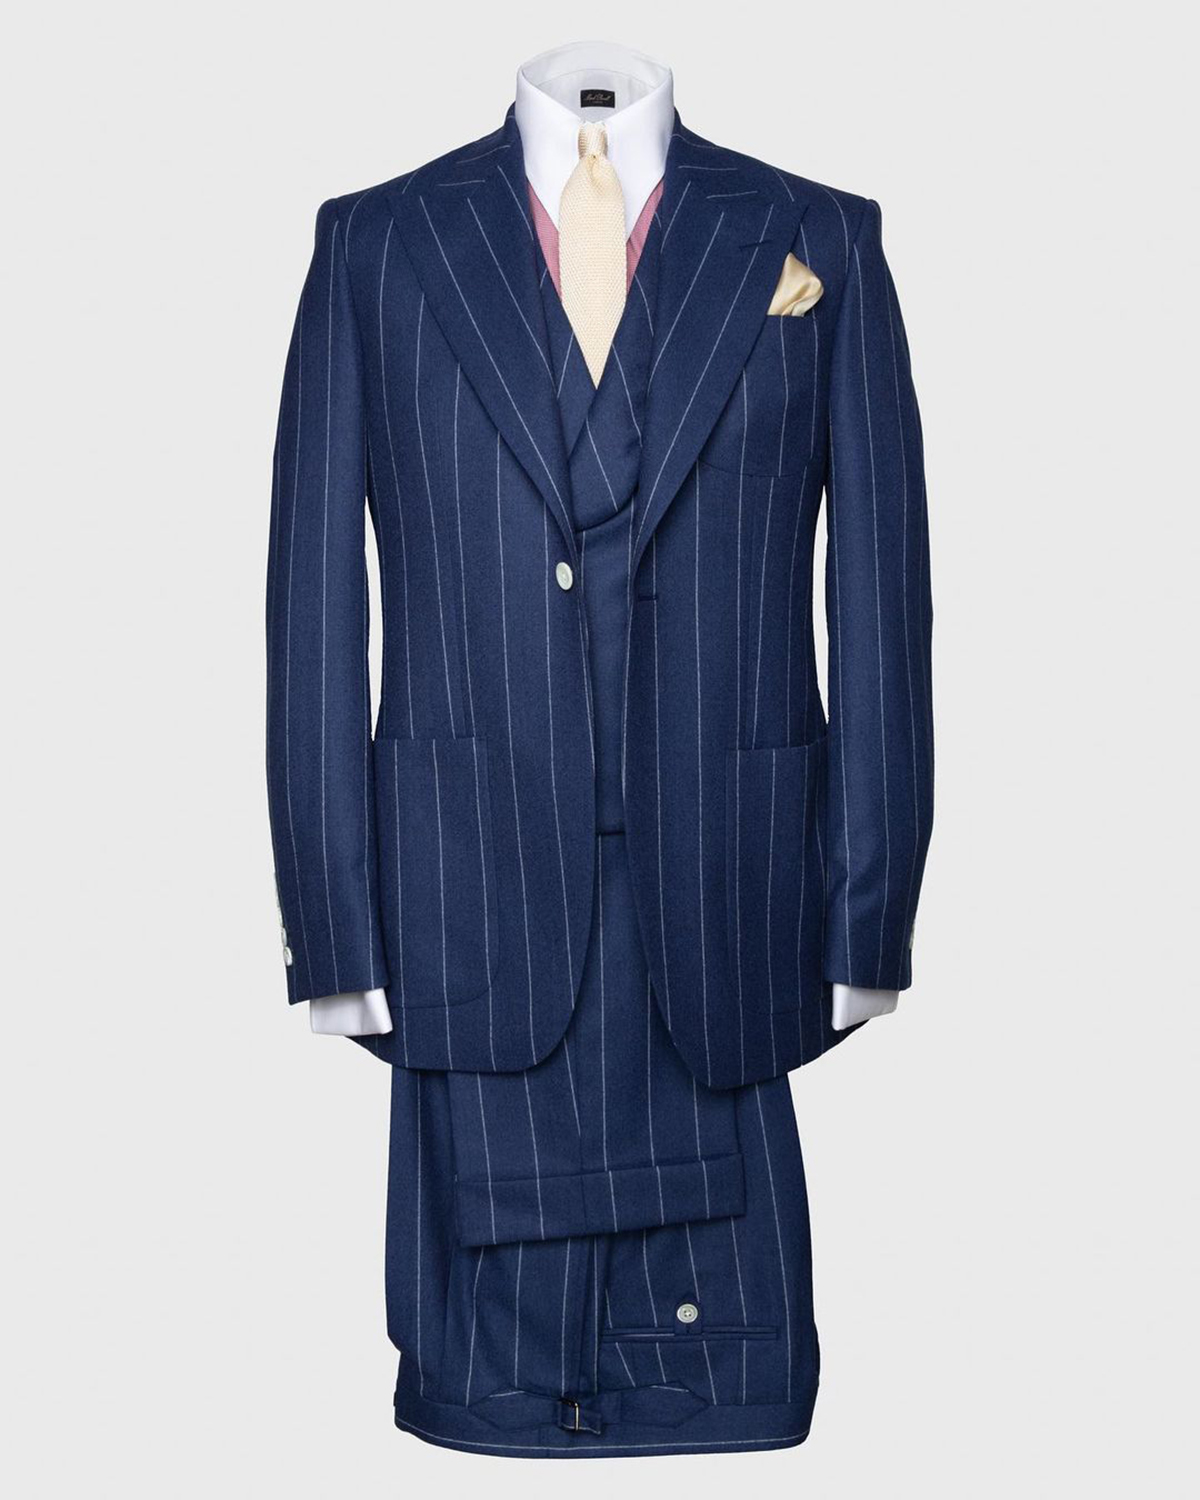 NOWY STYLE MĘŻCZYZN SUITS Wedding Groom Tuxedo Peit Rapel Single Bergroom Suit Projektant mody 3 sztuki Blazers kamizelki garnitury Tuxedos